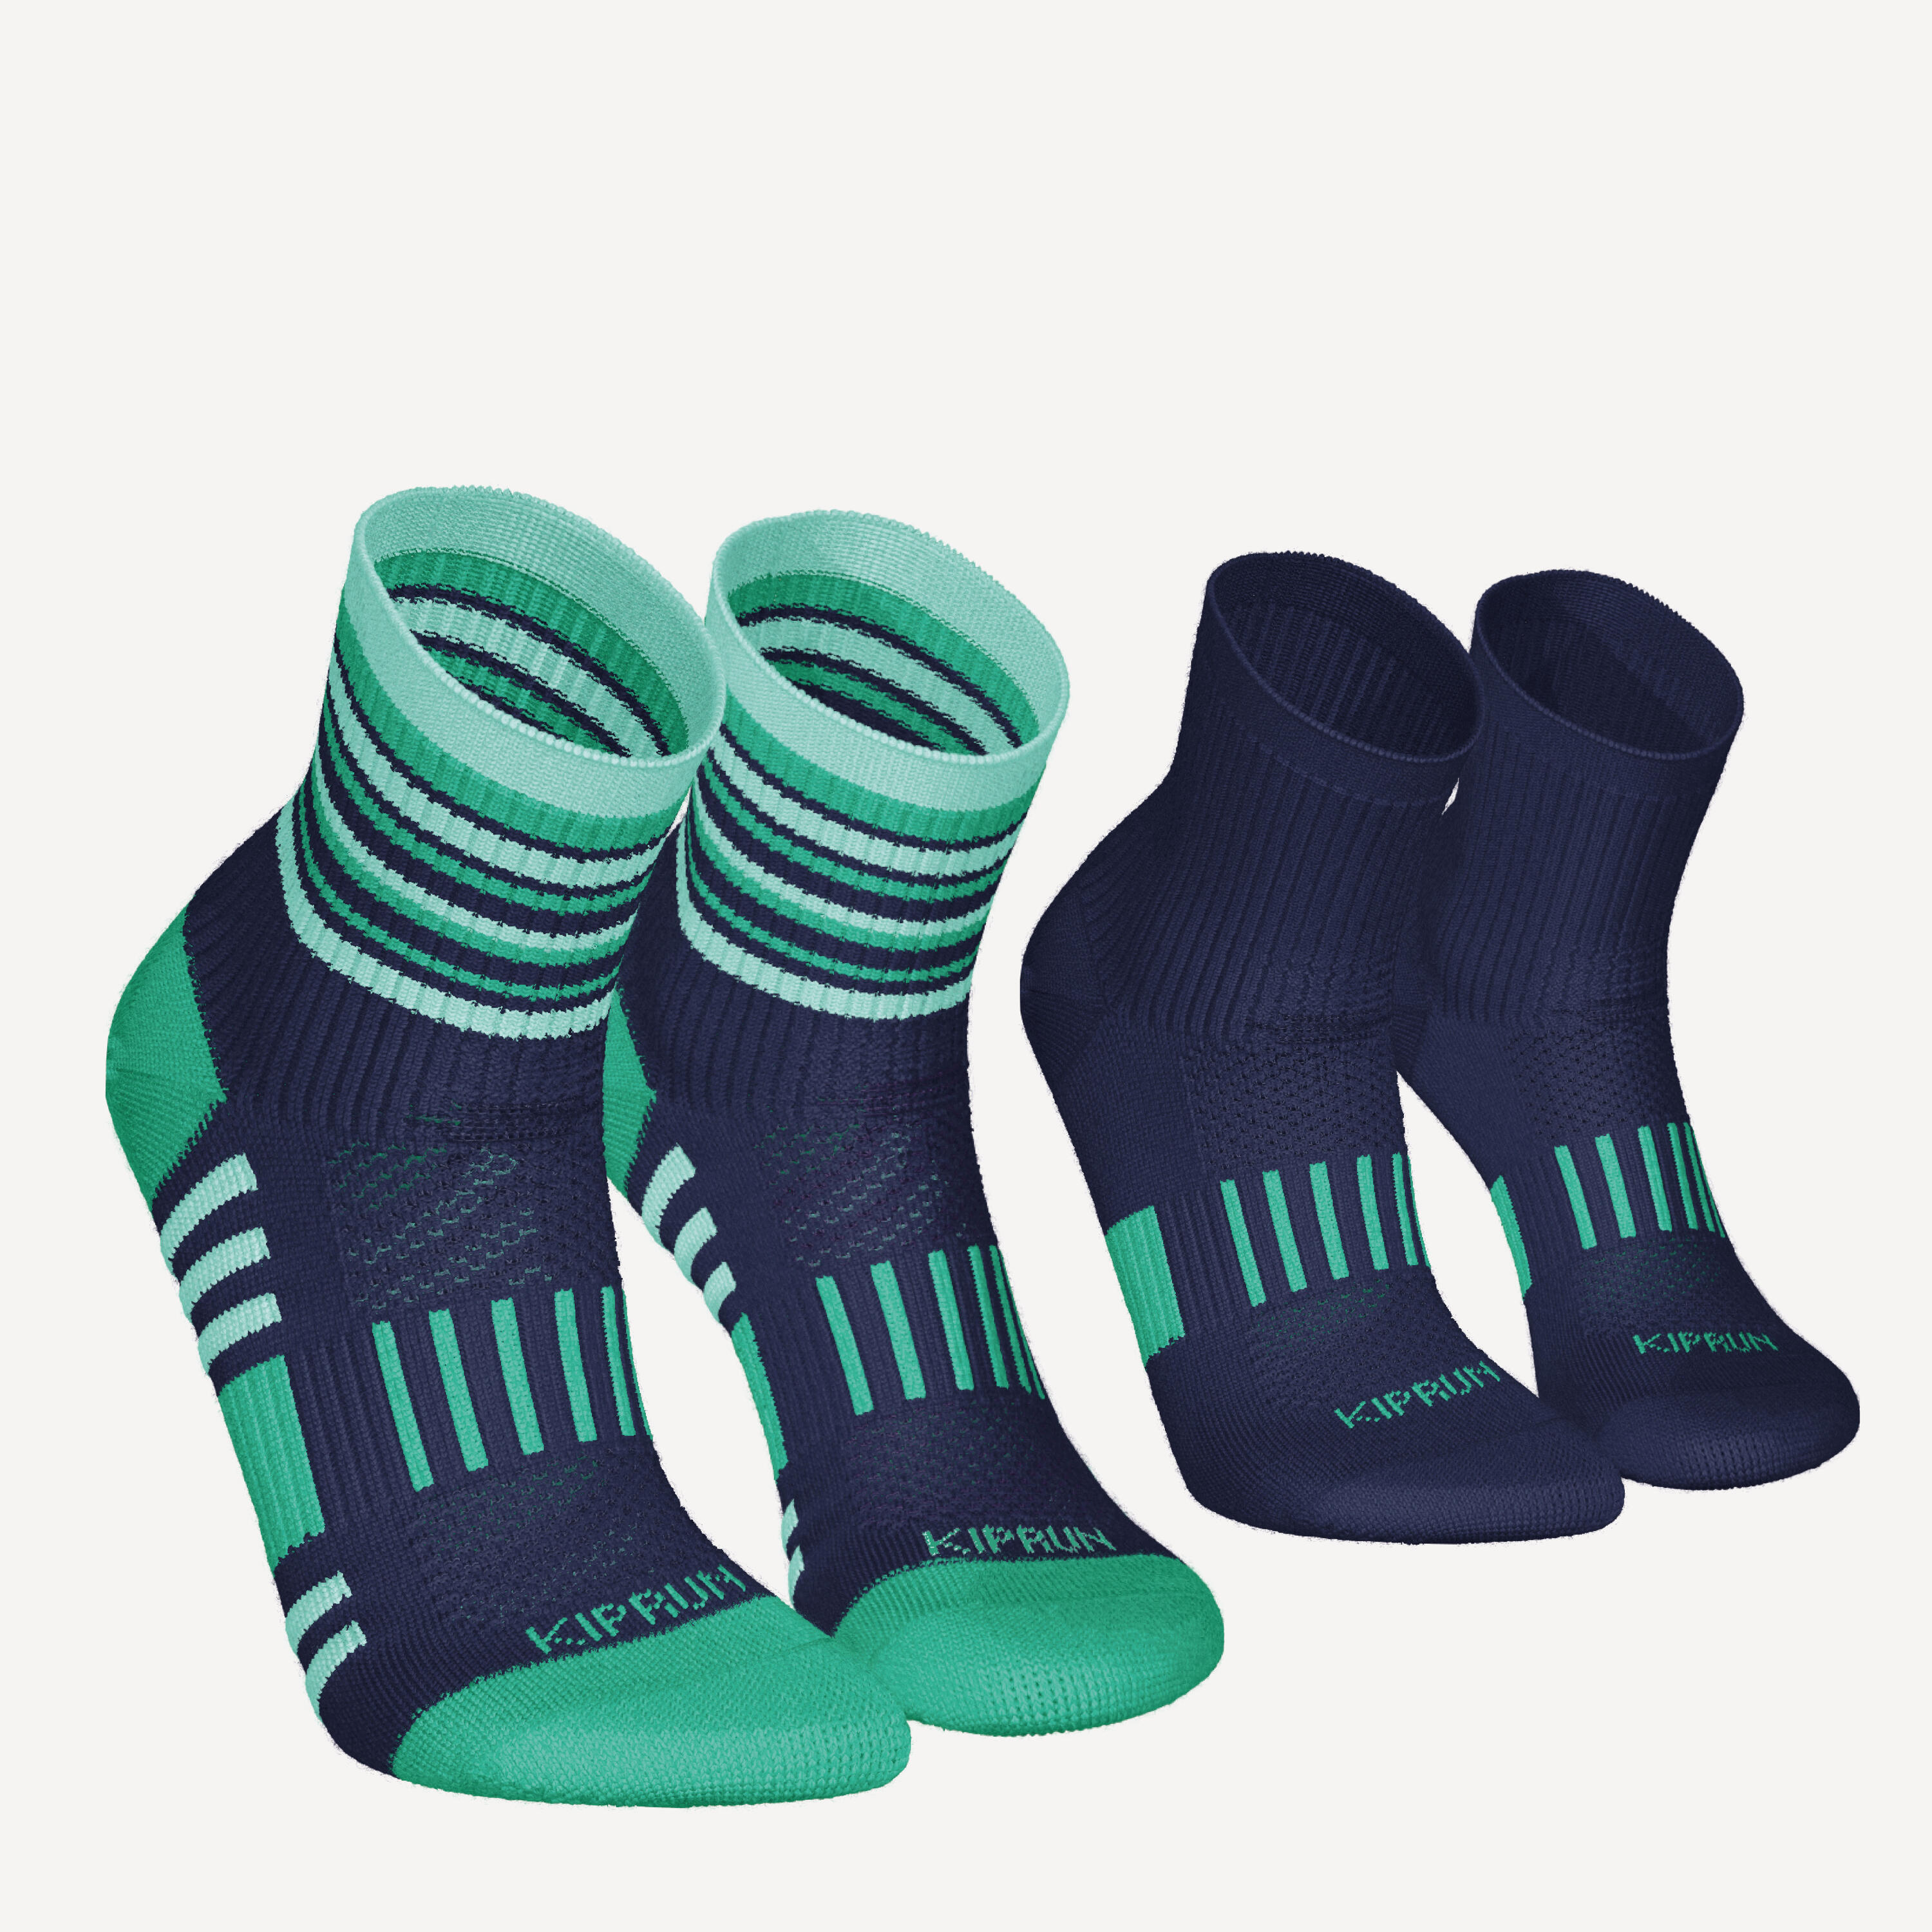 KIPRUN 500 mid kids' comfort running socks 2-pack - navy and striped green 1/9